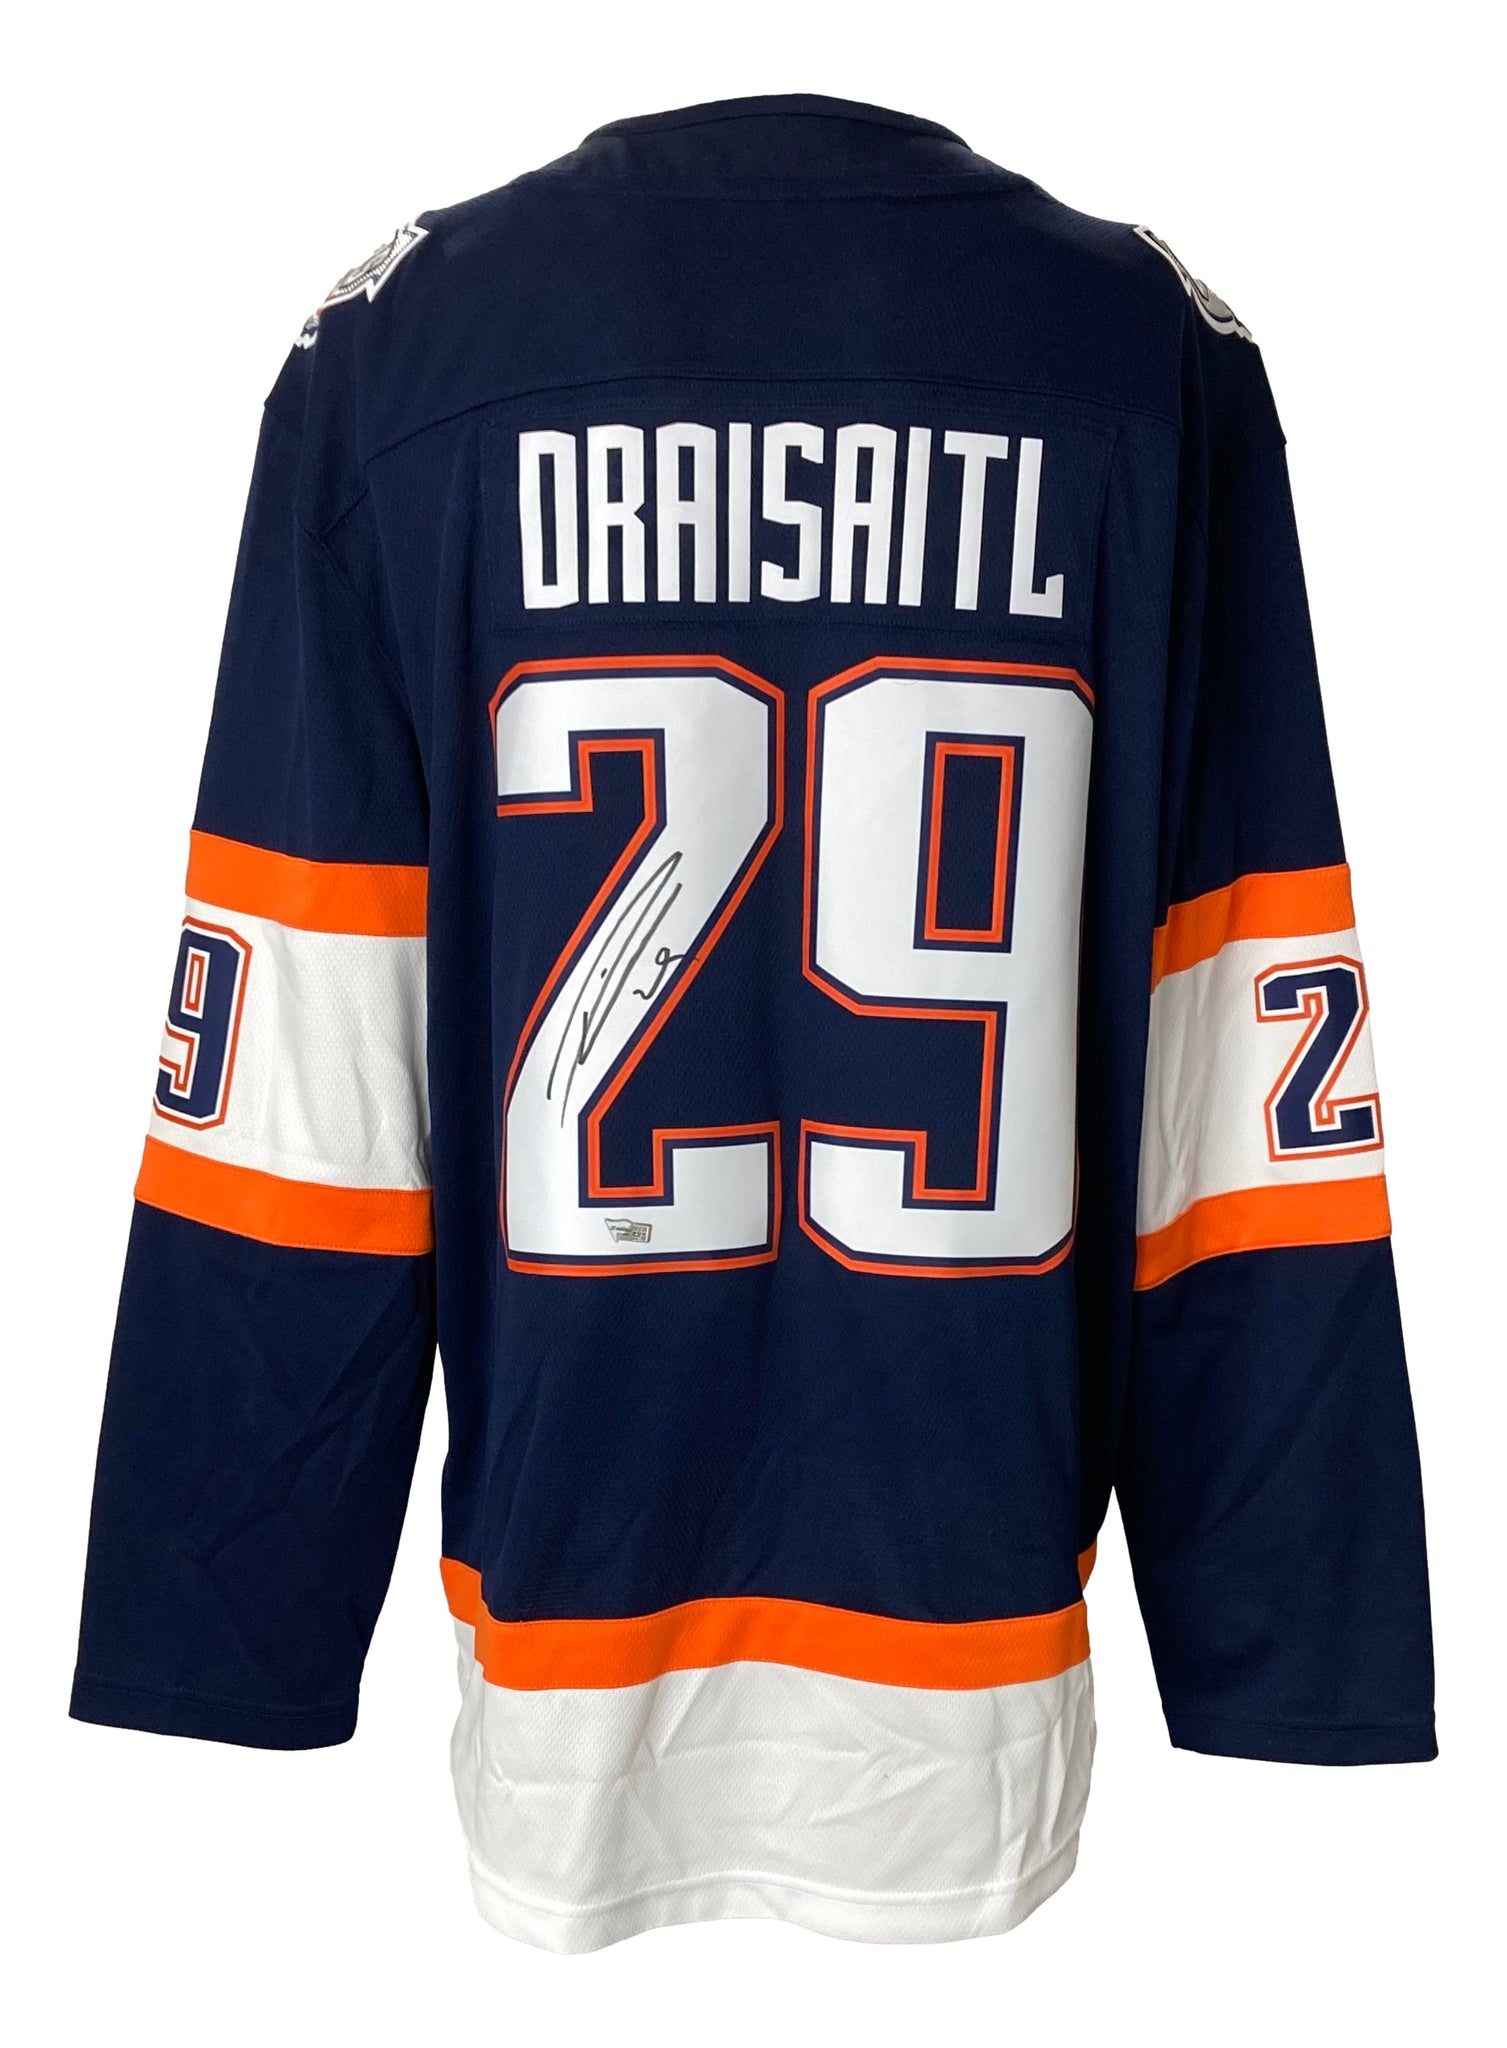 NHL Leon Draisaitl Signed Jerseys, Collectible Leon Draisaitl